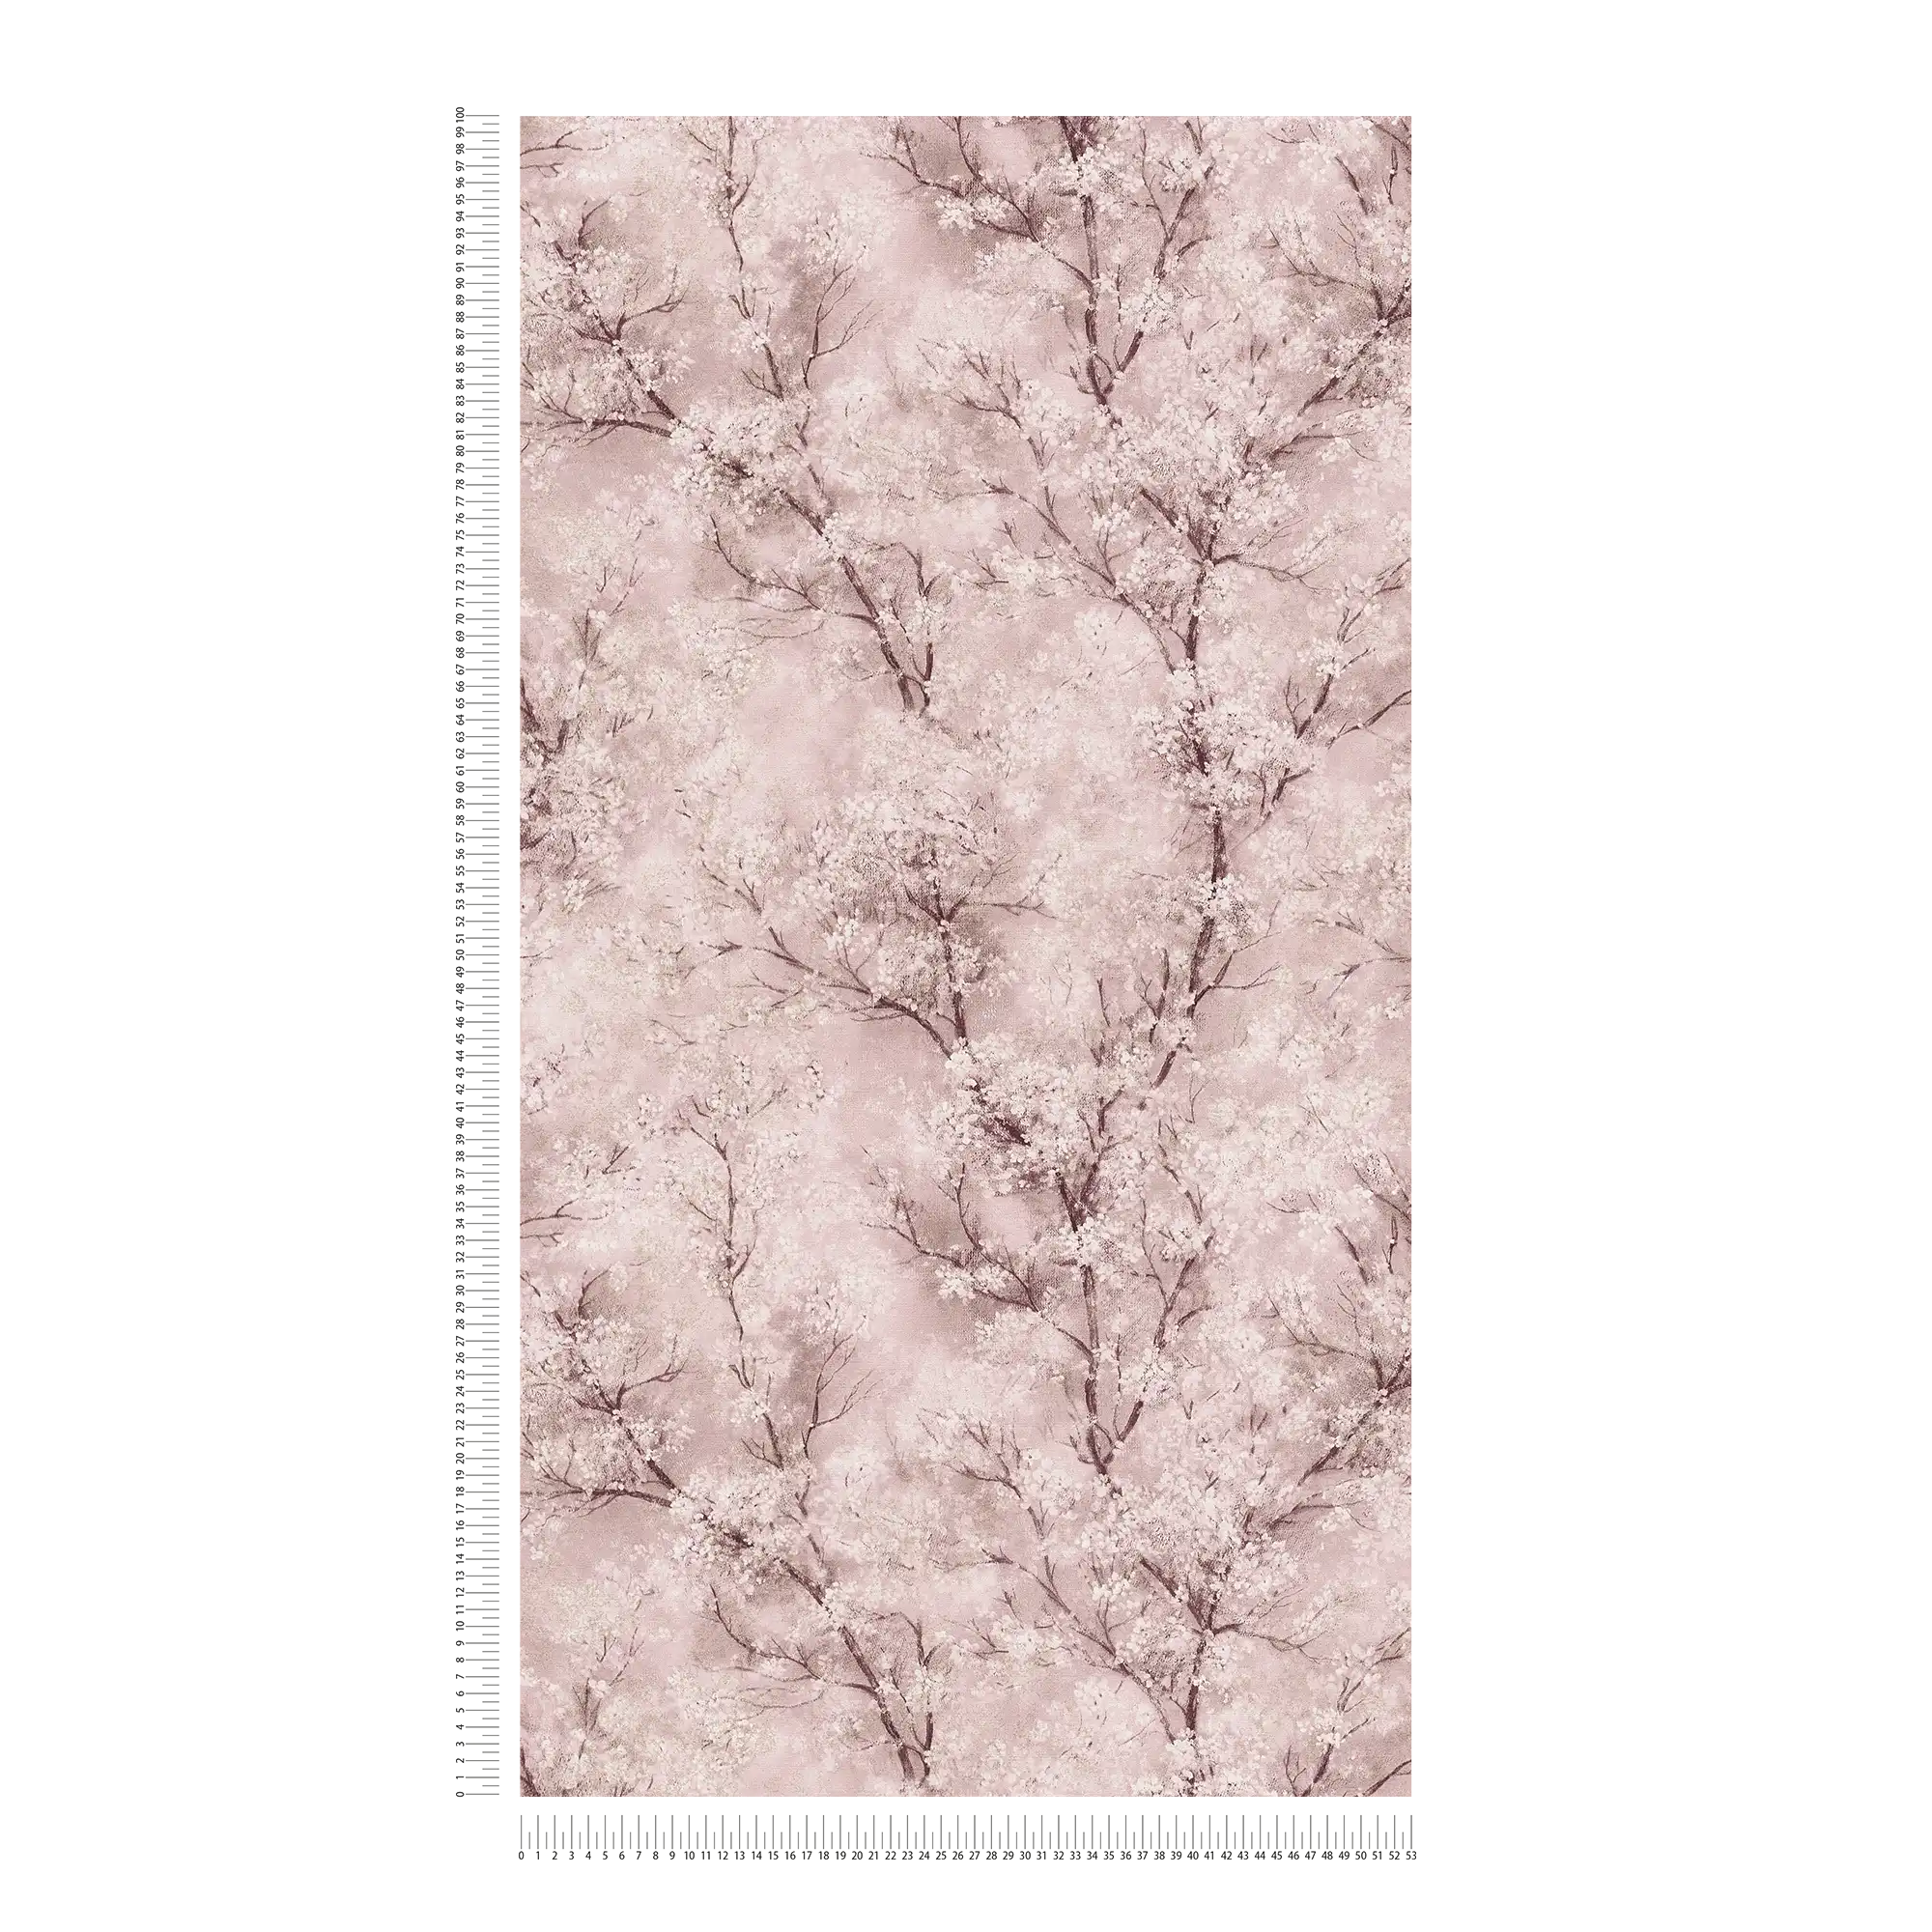             wallpaper cherry blossoms glitter effect - pink, brown, white
        